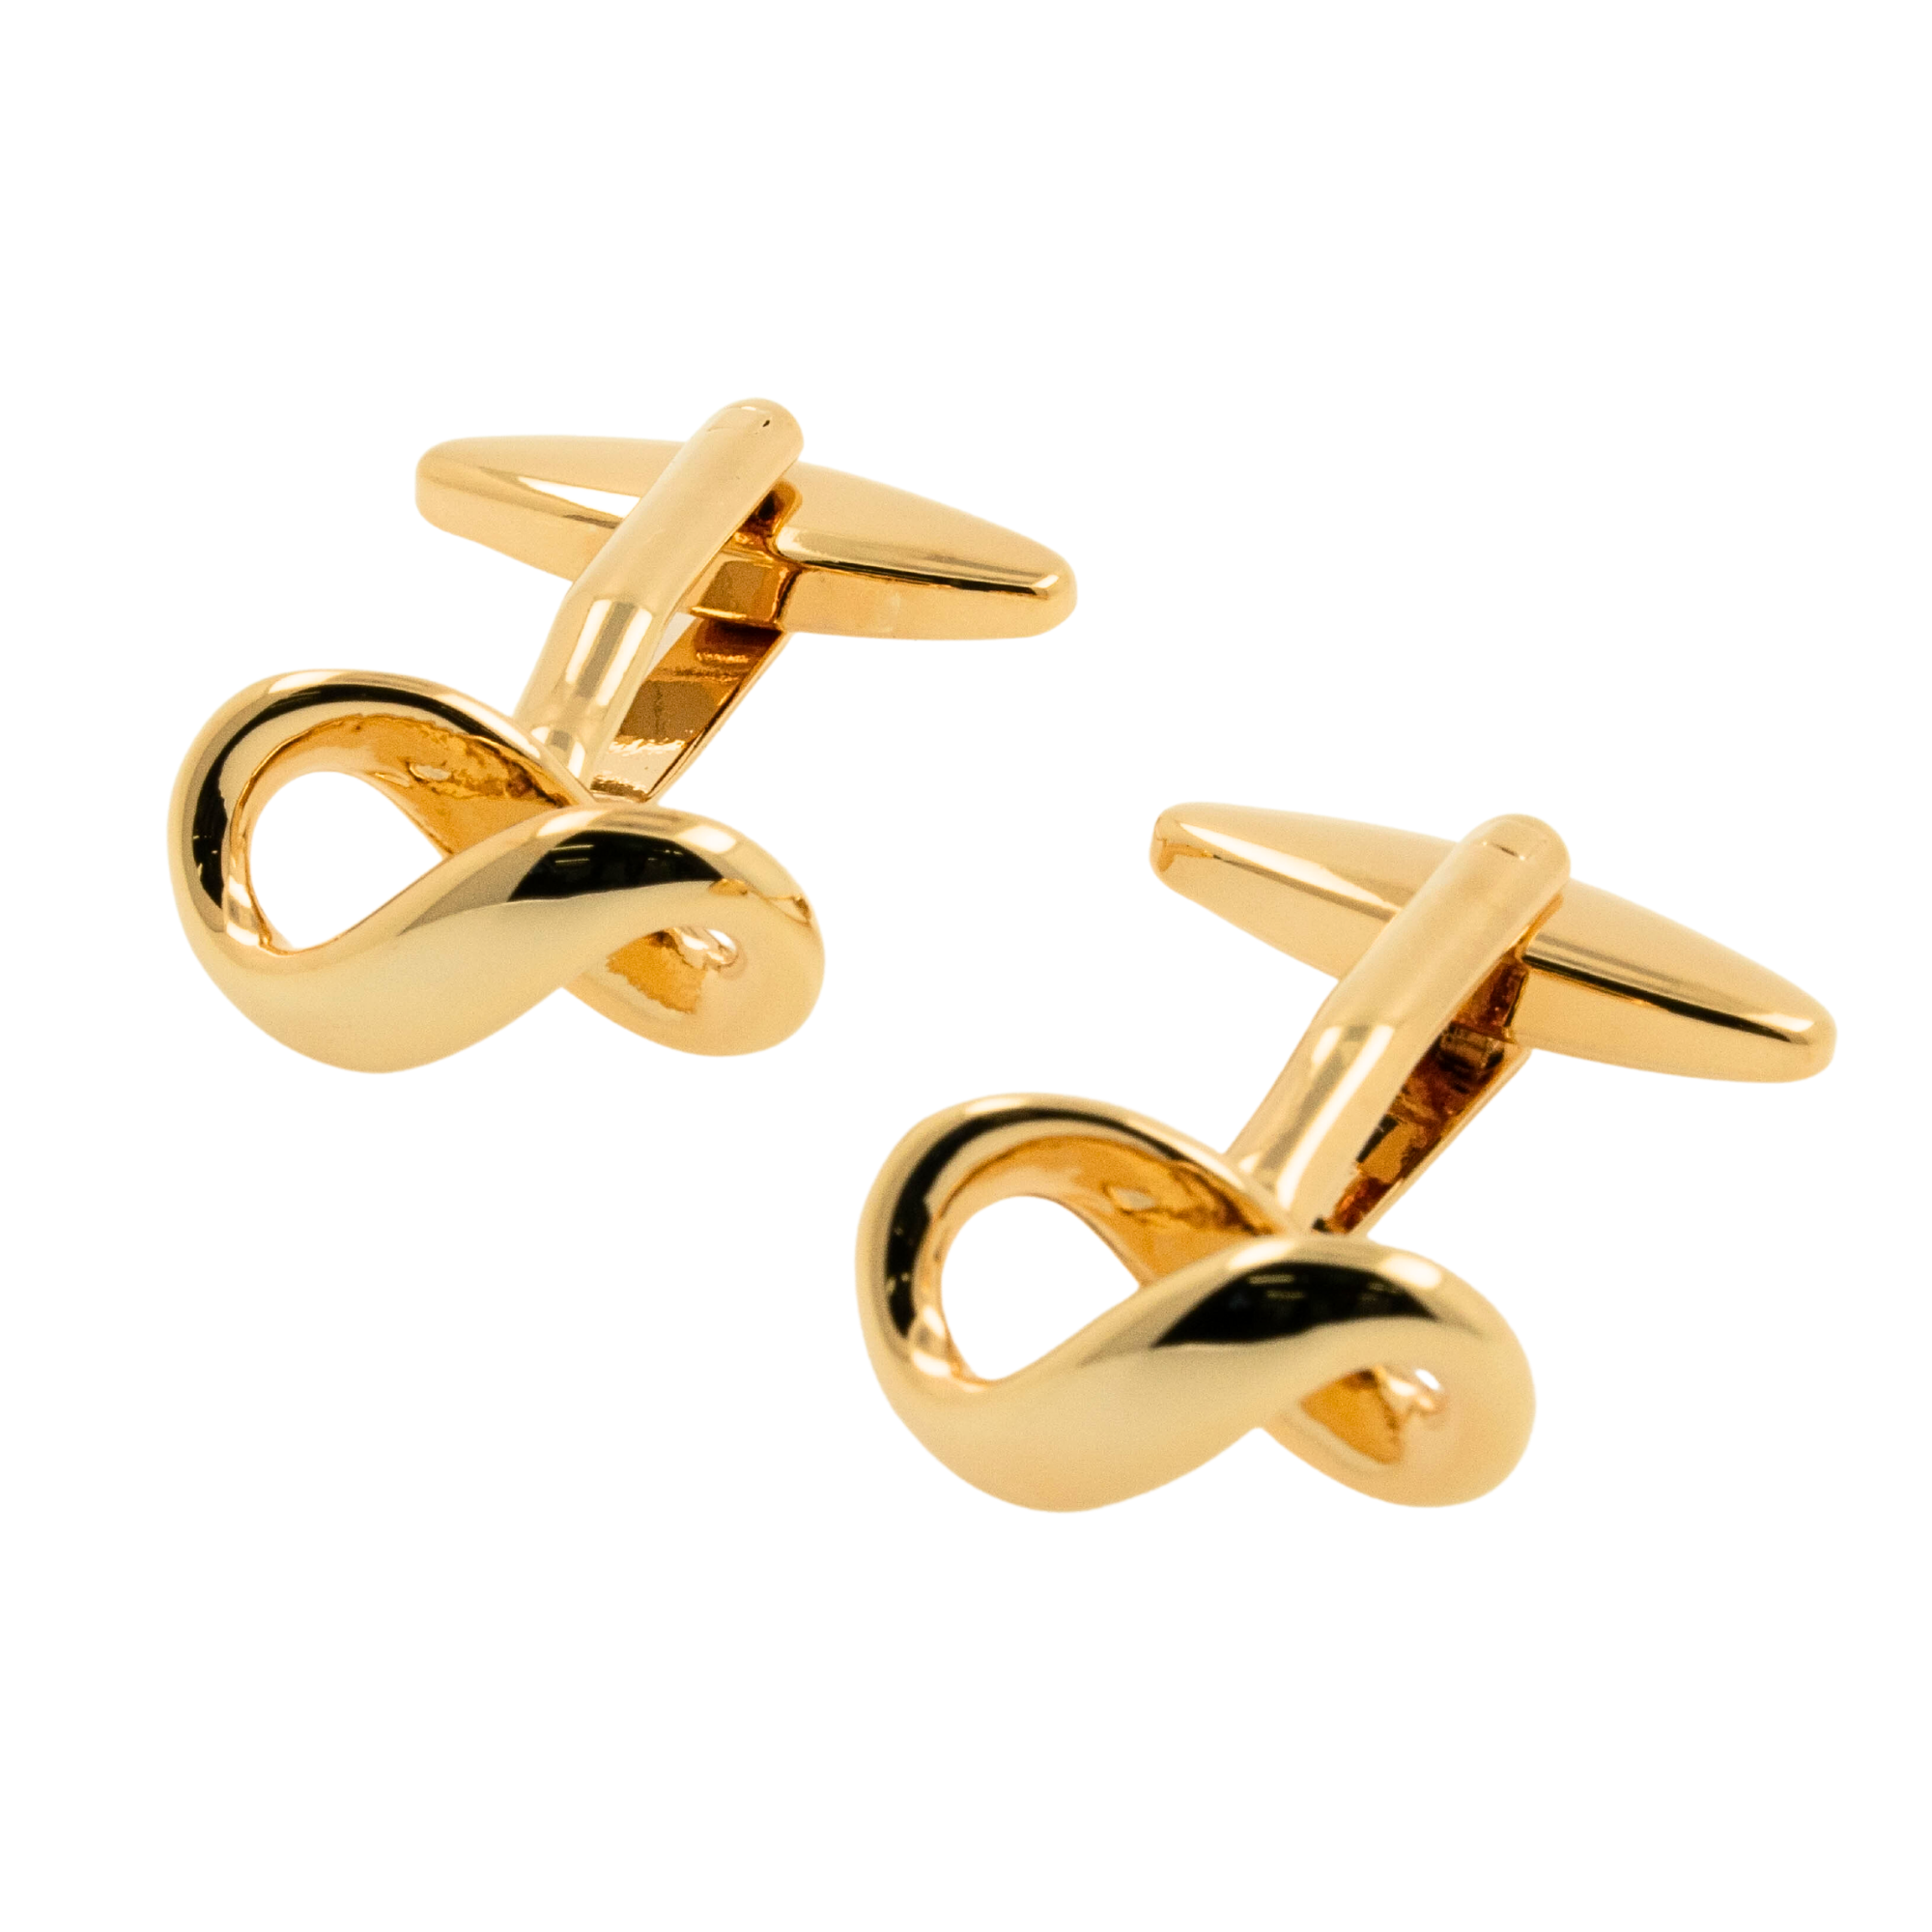 Gold Infinity Symbol Cufflinks